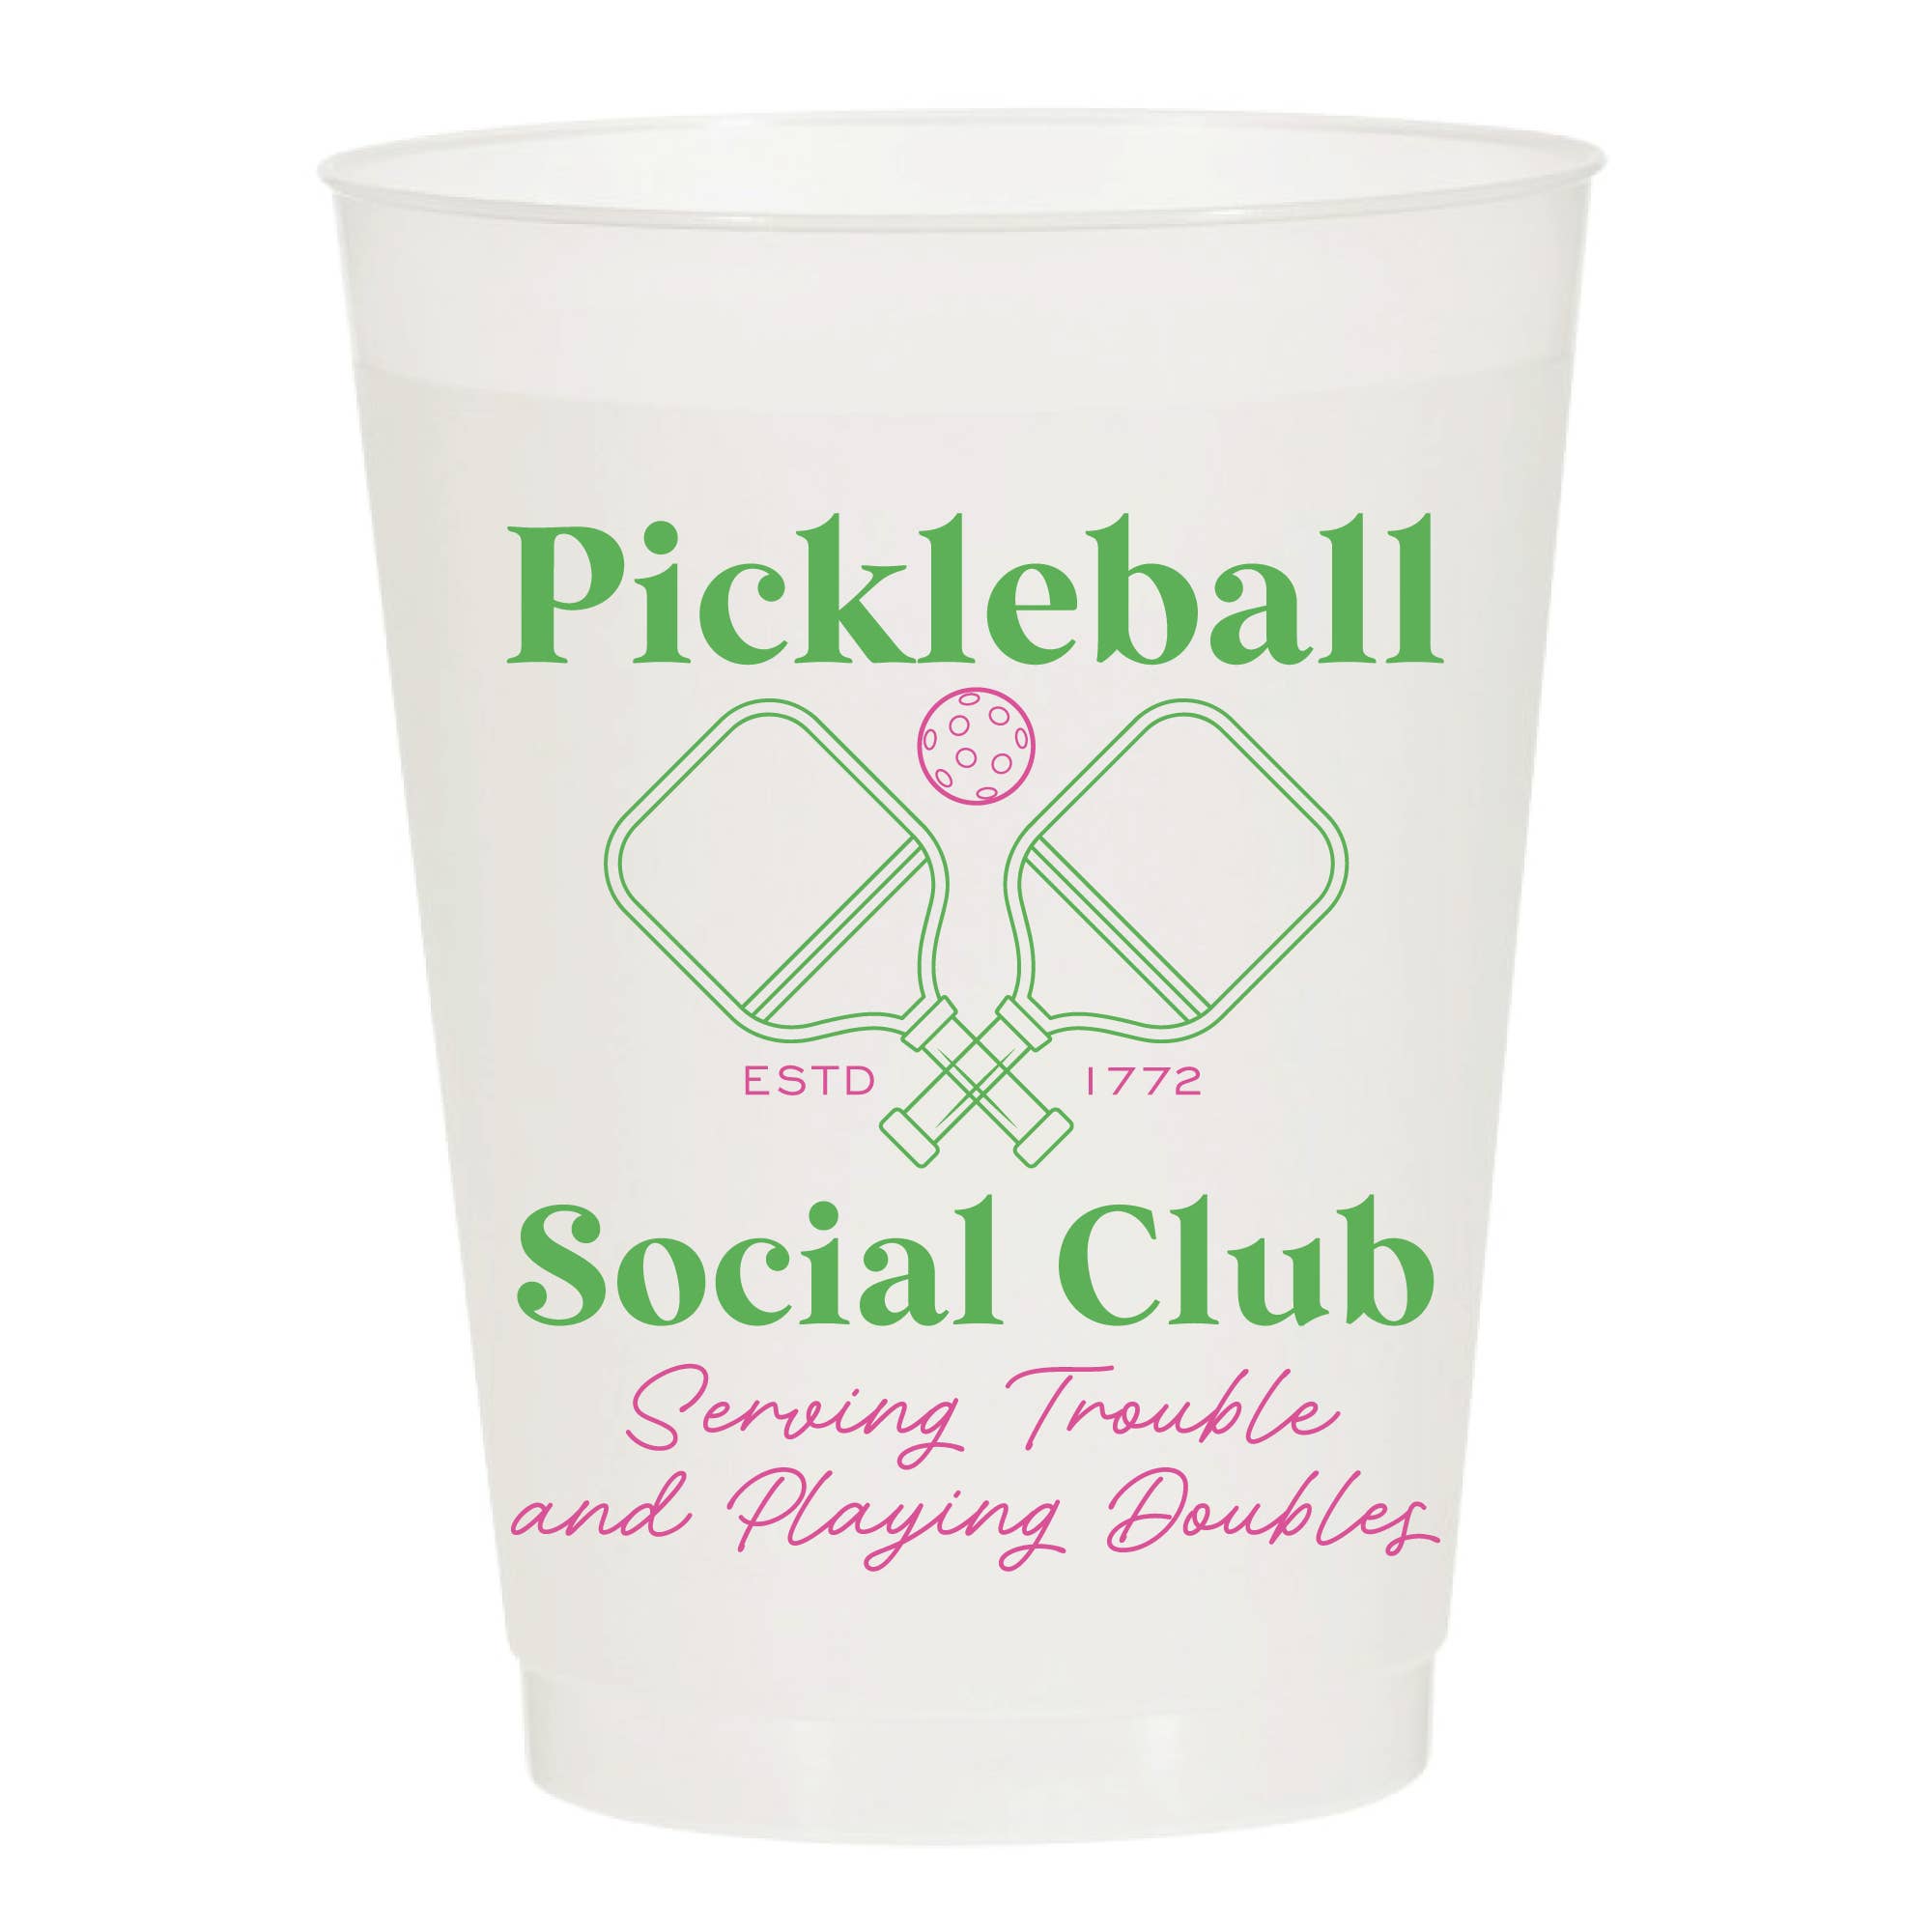 Pickleball Reusable Cups - Social Club - Set of 6 or 10